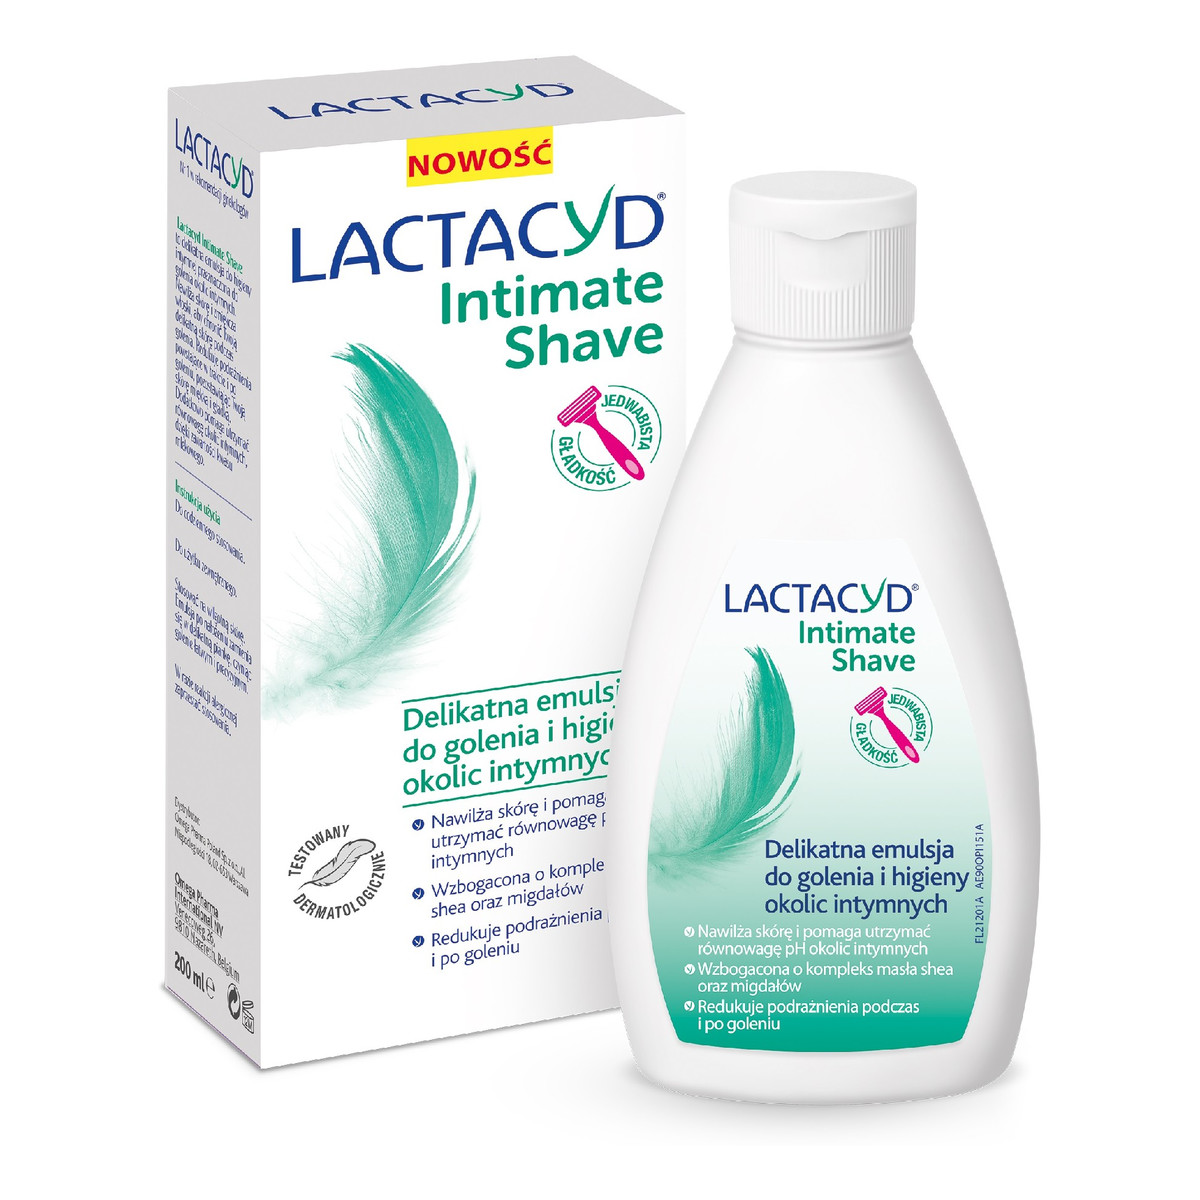 Lactacyd Intimate Shave Delikatna Emulsja do golenia i higieny okolic intymnych 200ml